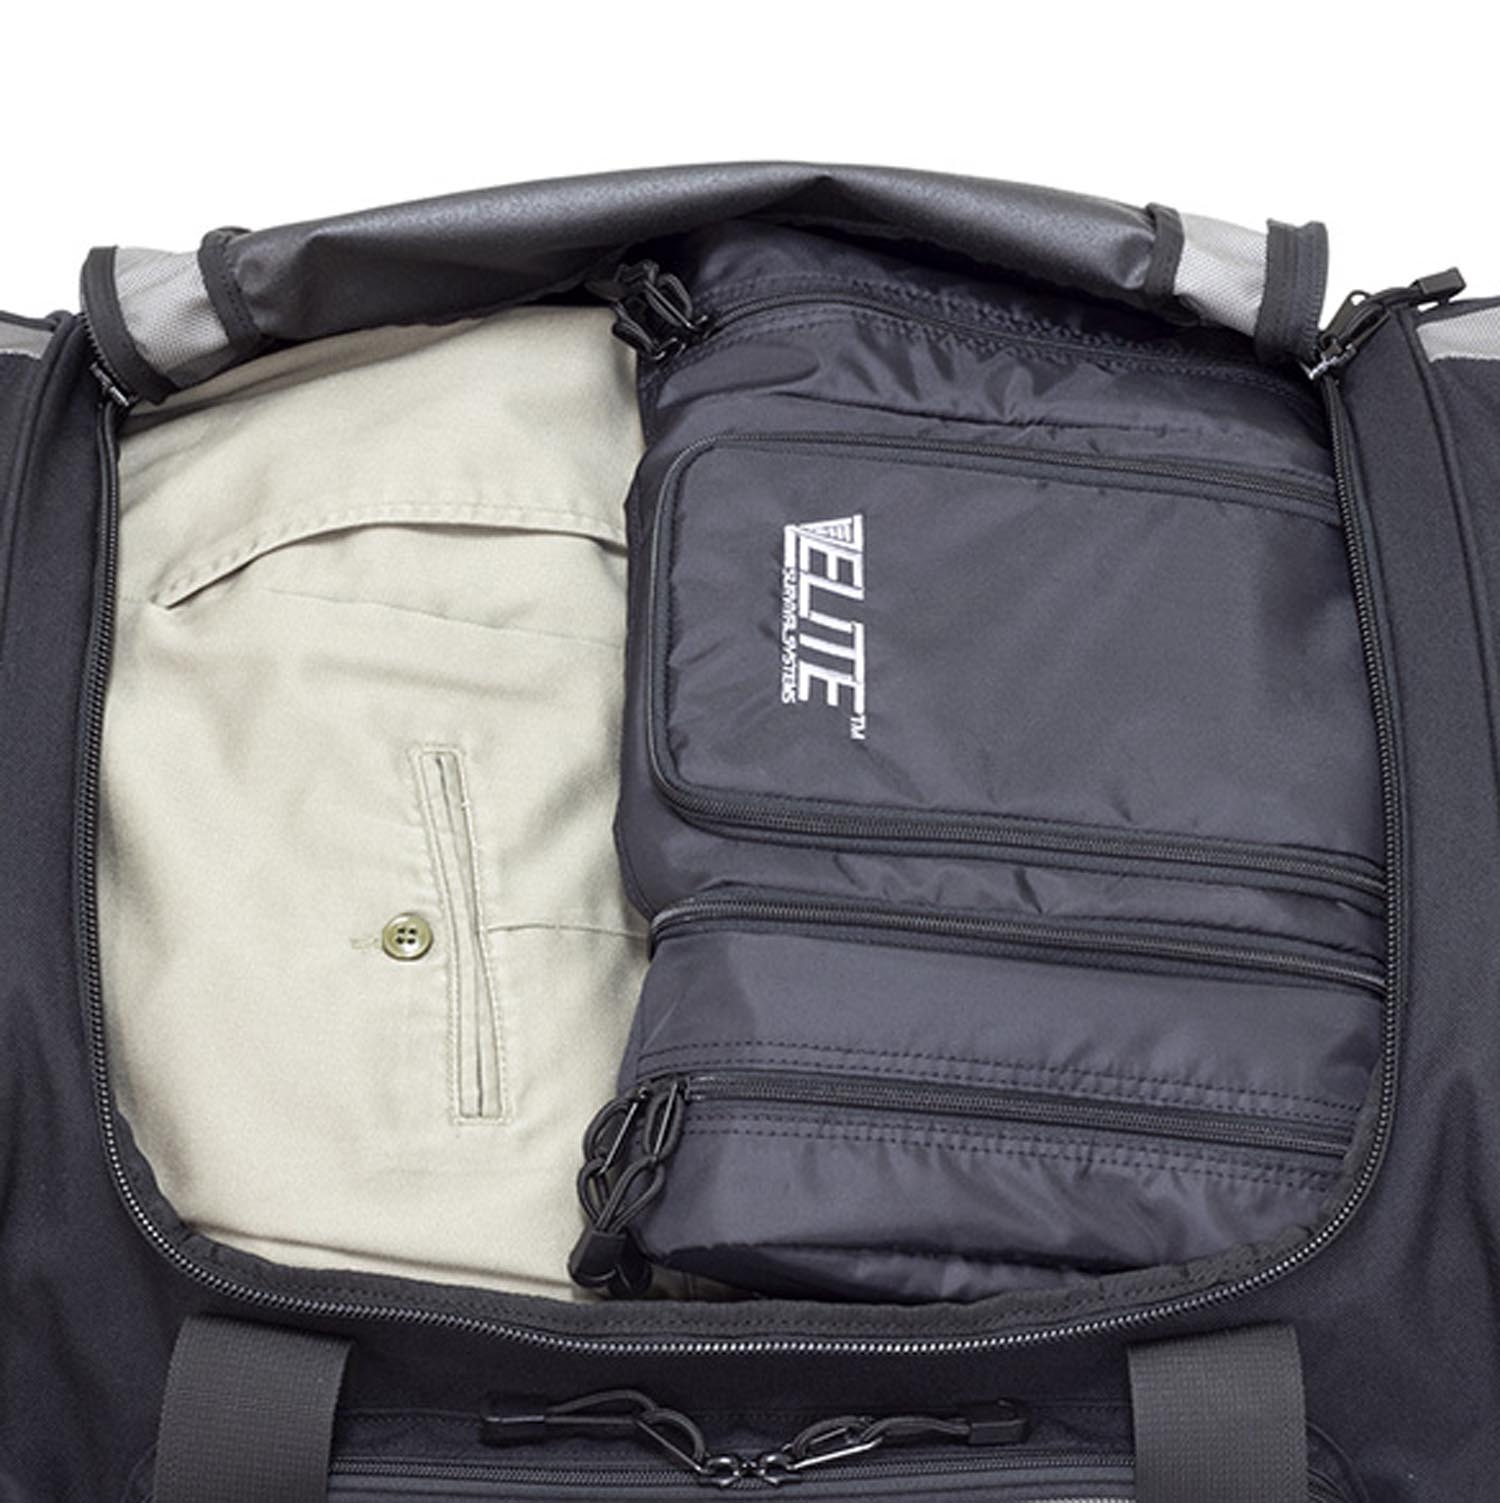 Elite Survival Systems Travel Prone Toiletry Kit